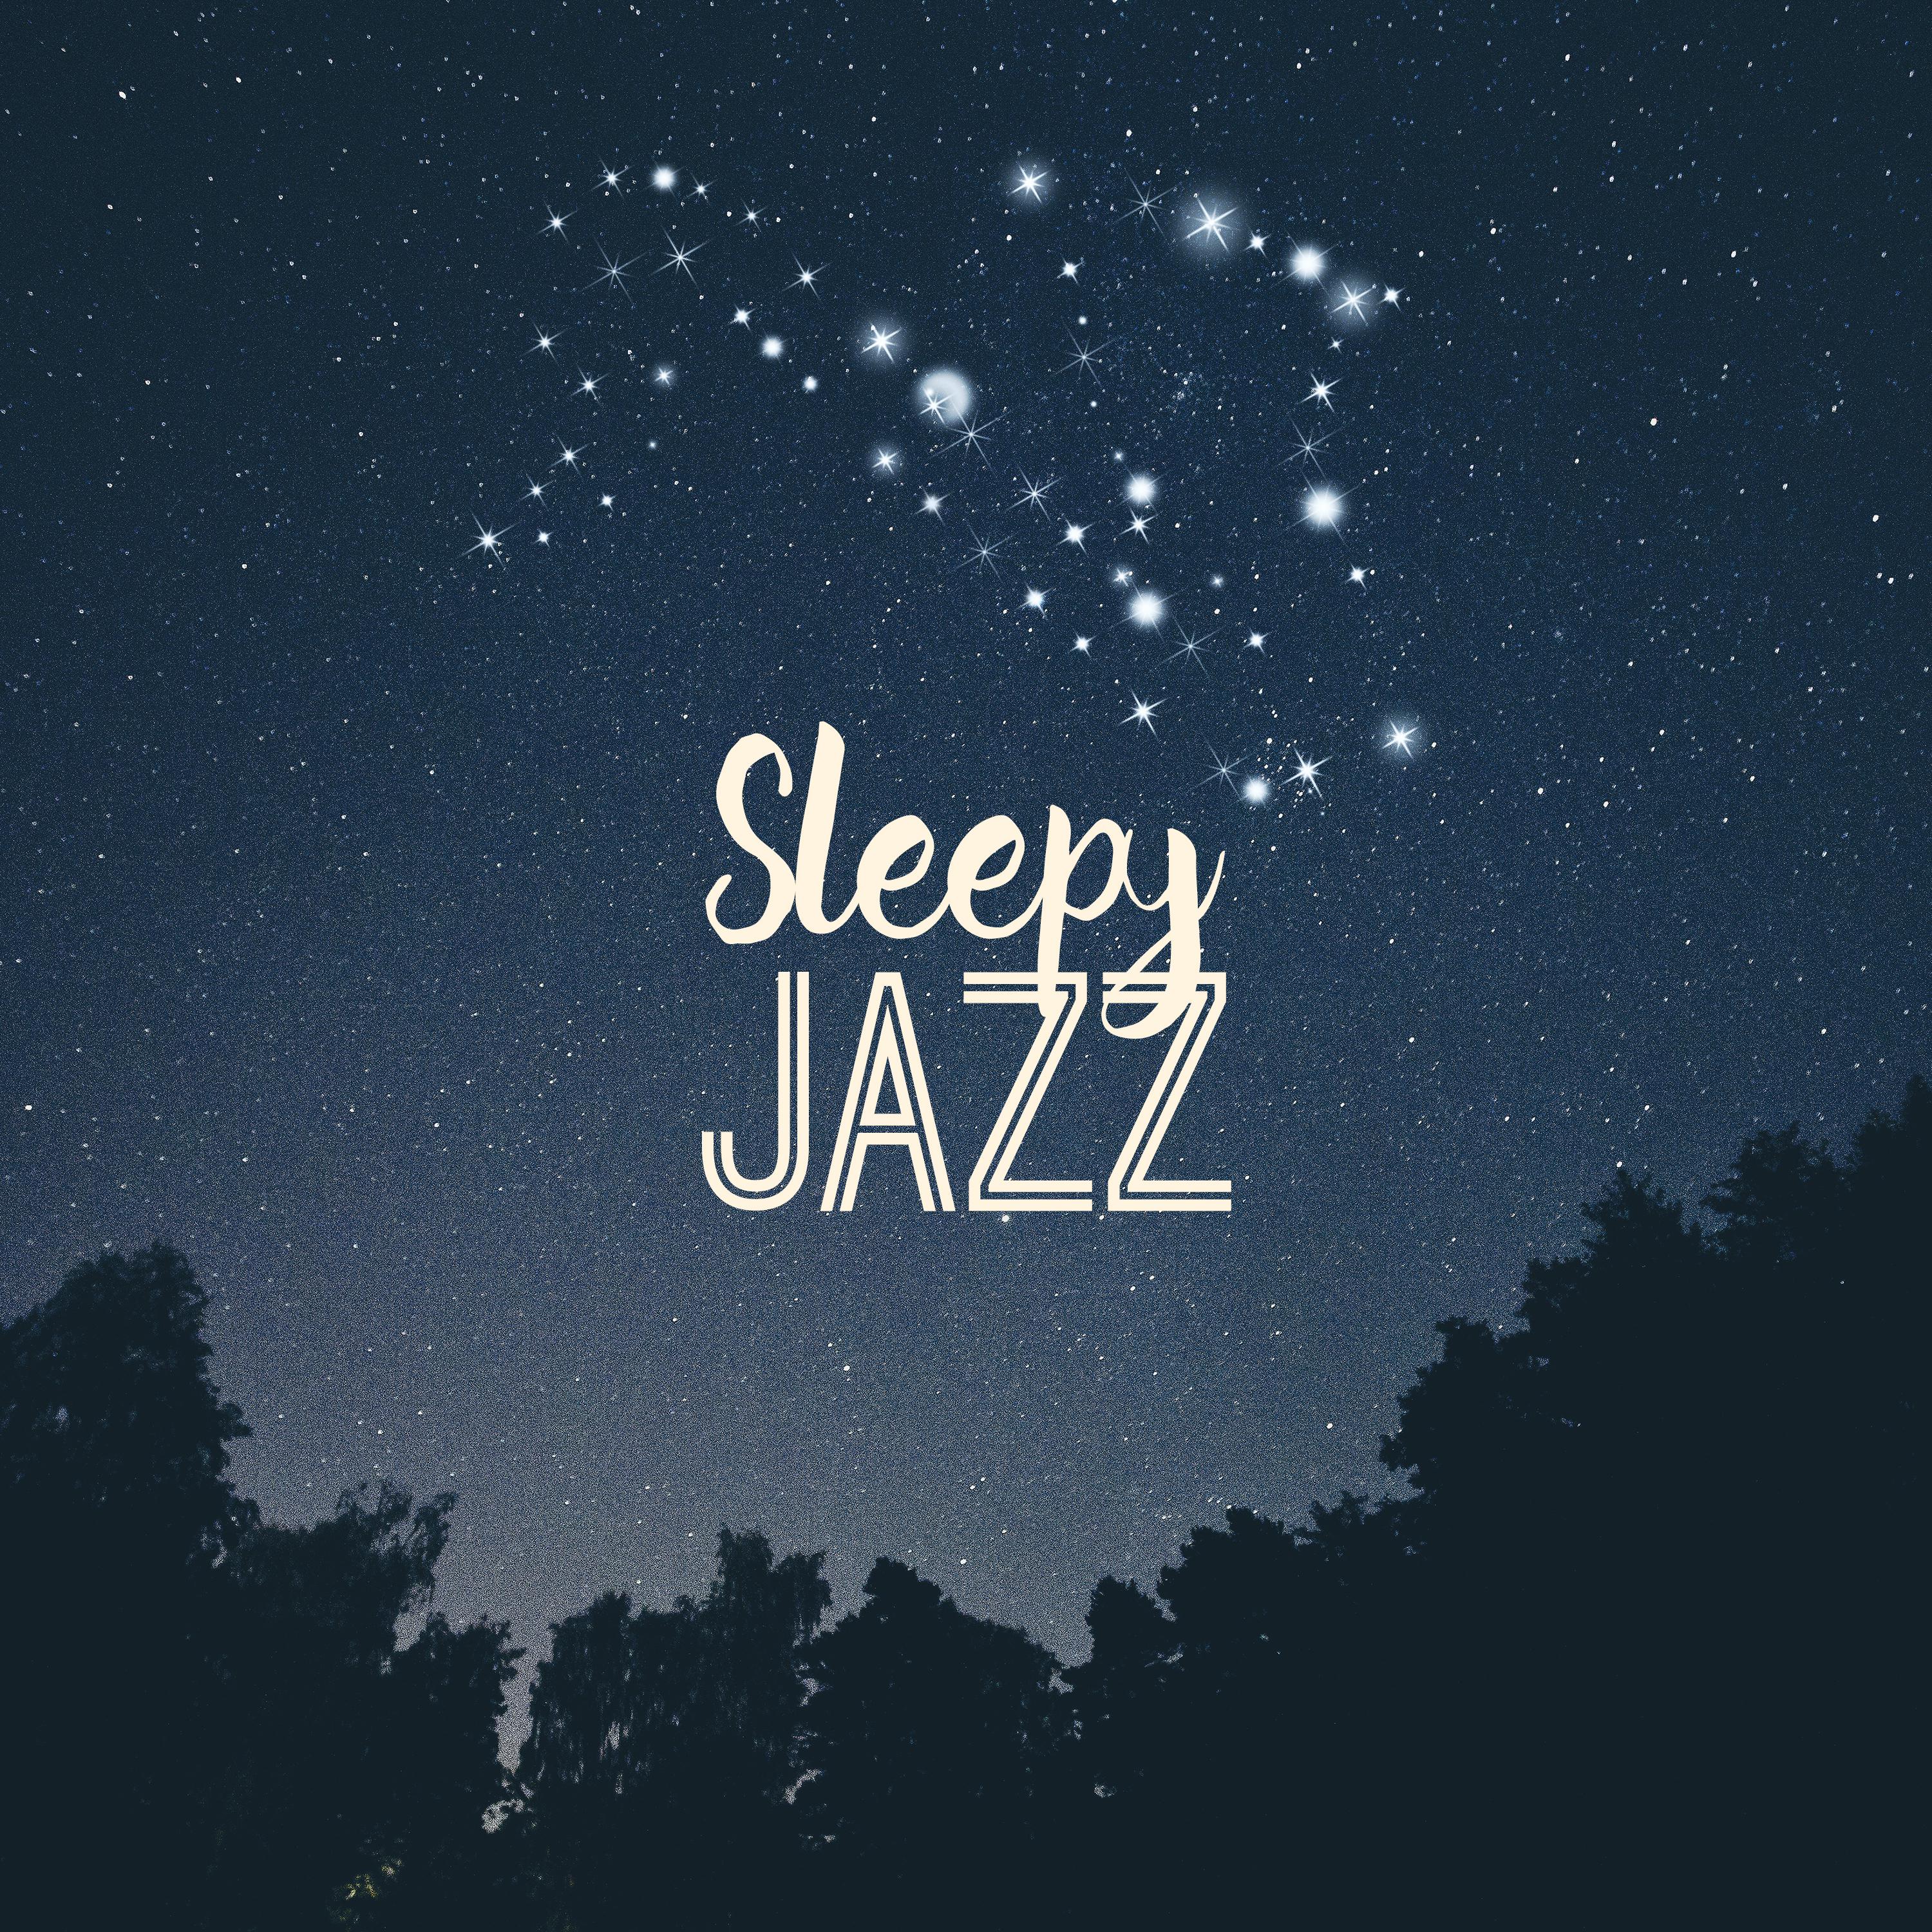 Sleepy Jazz